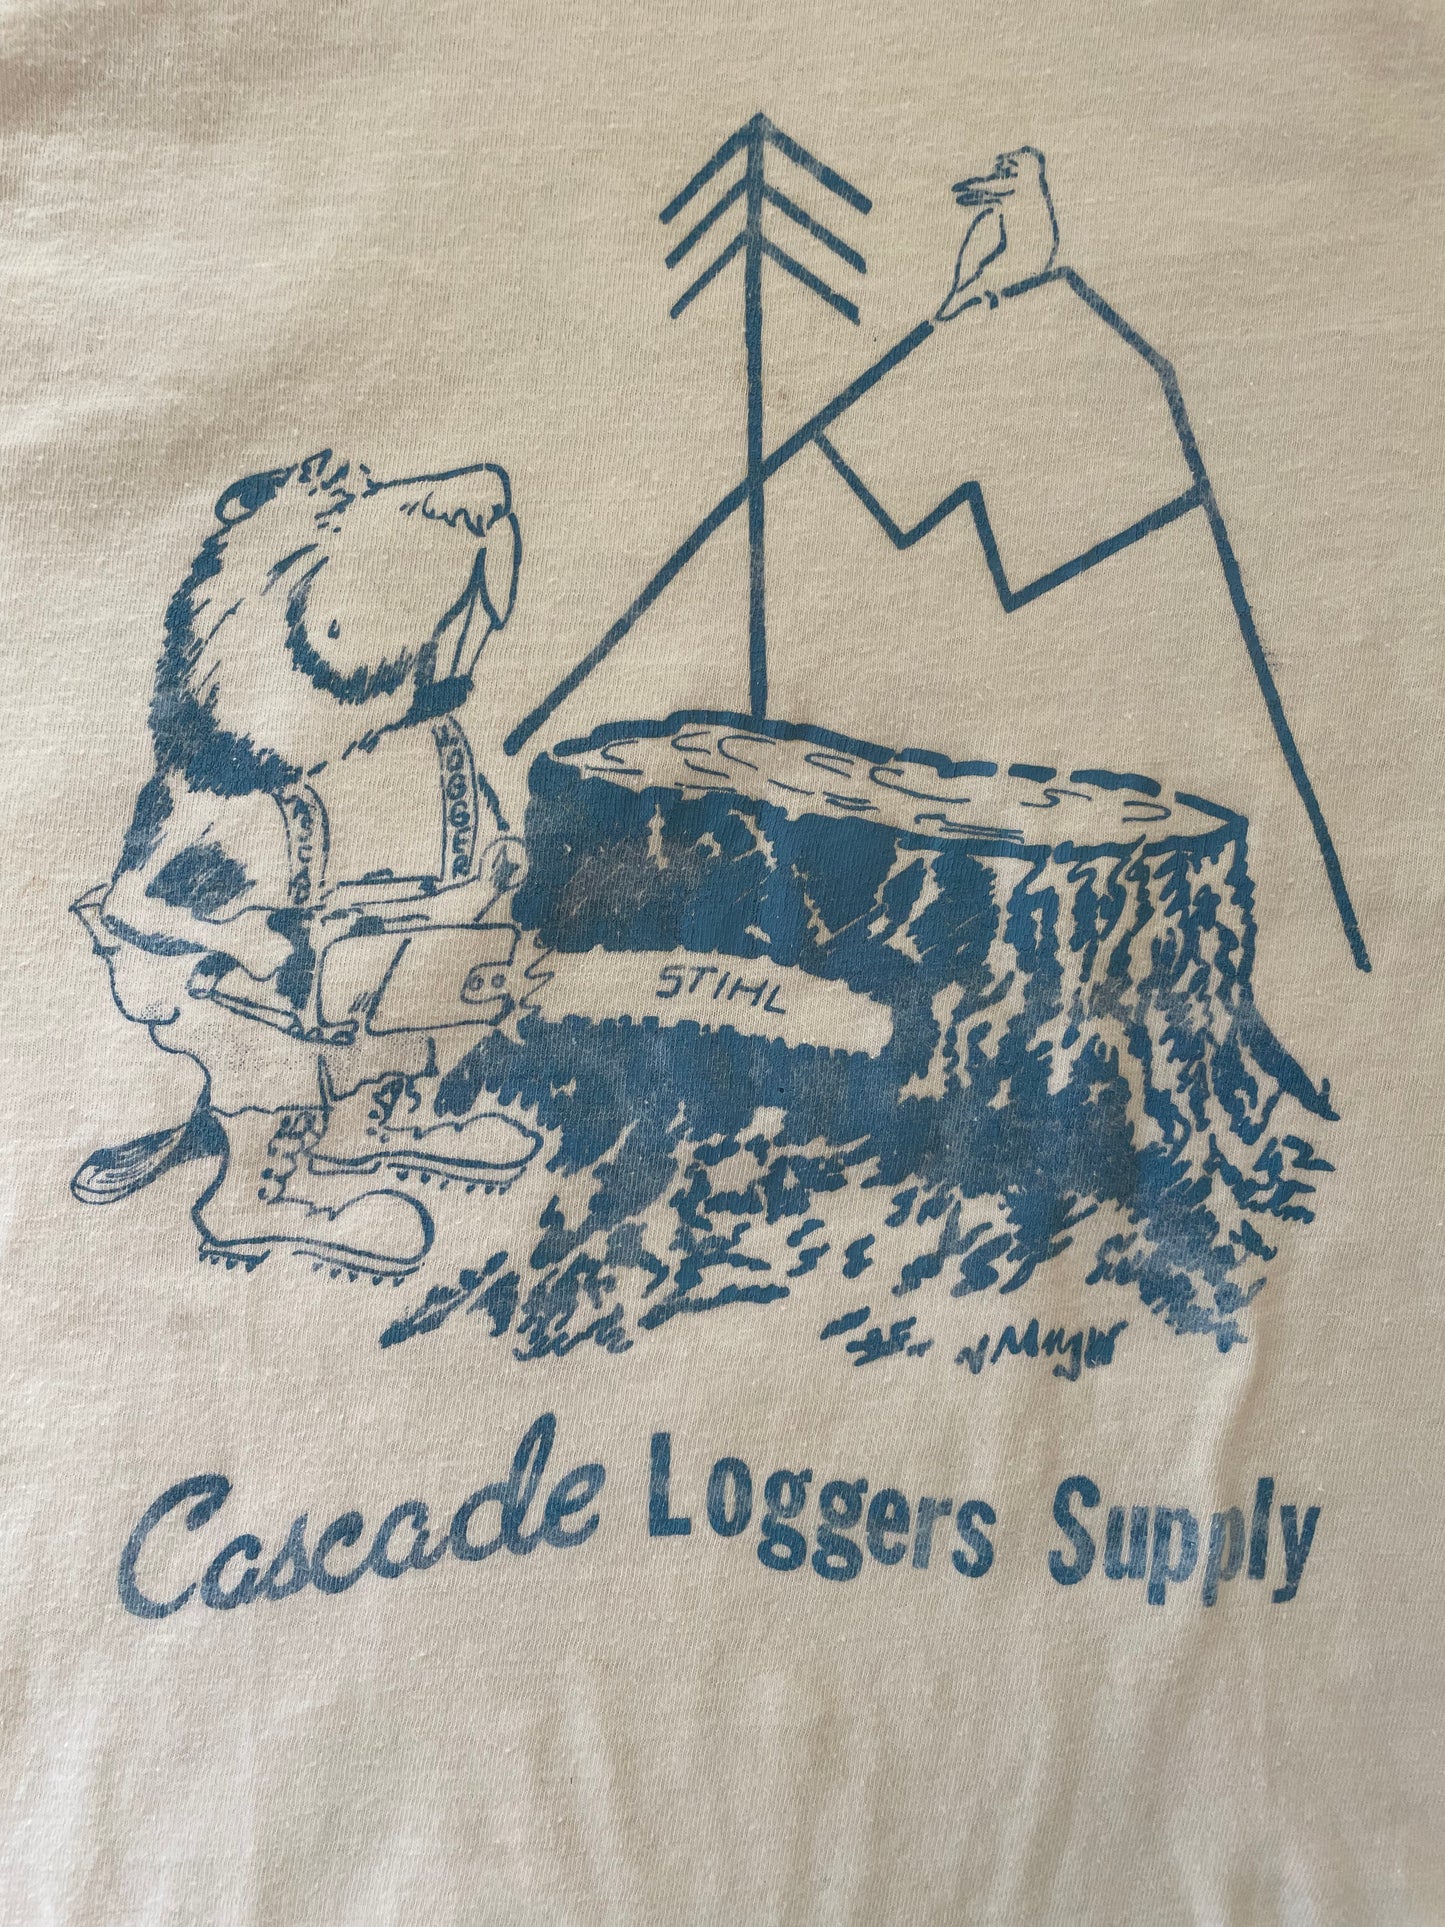 70s/80s Cascade Loggers Supply Tee